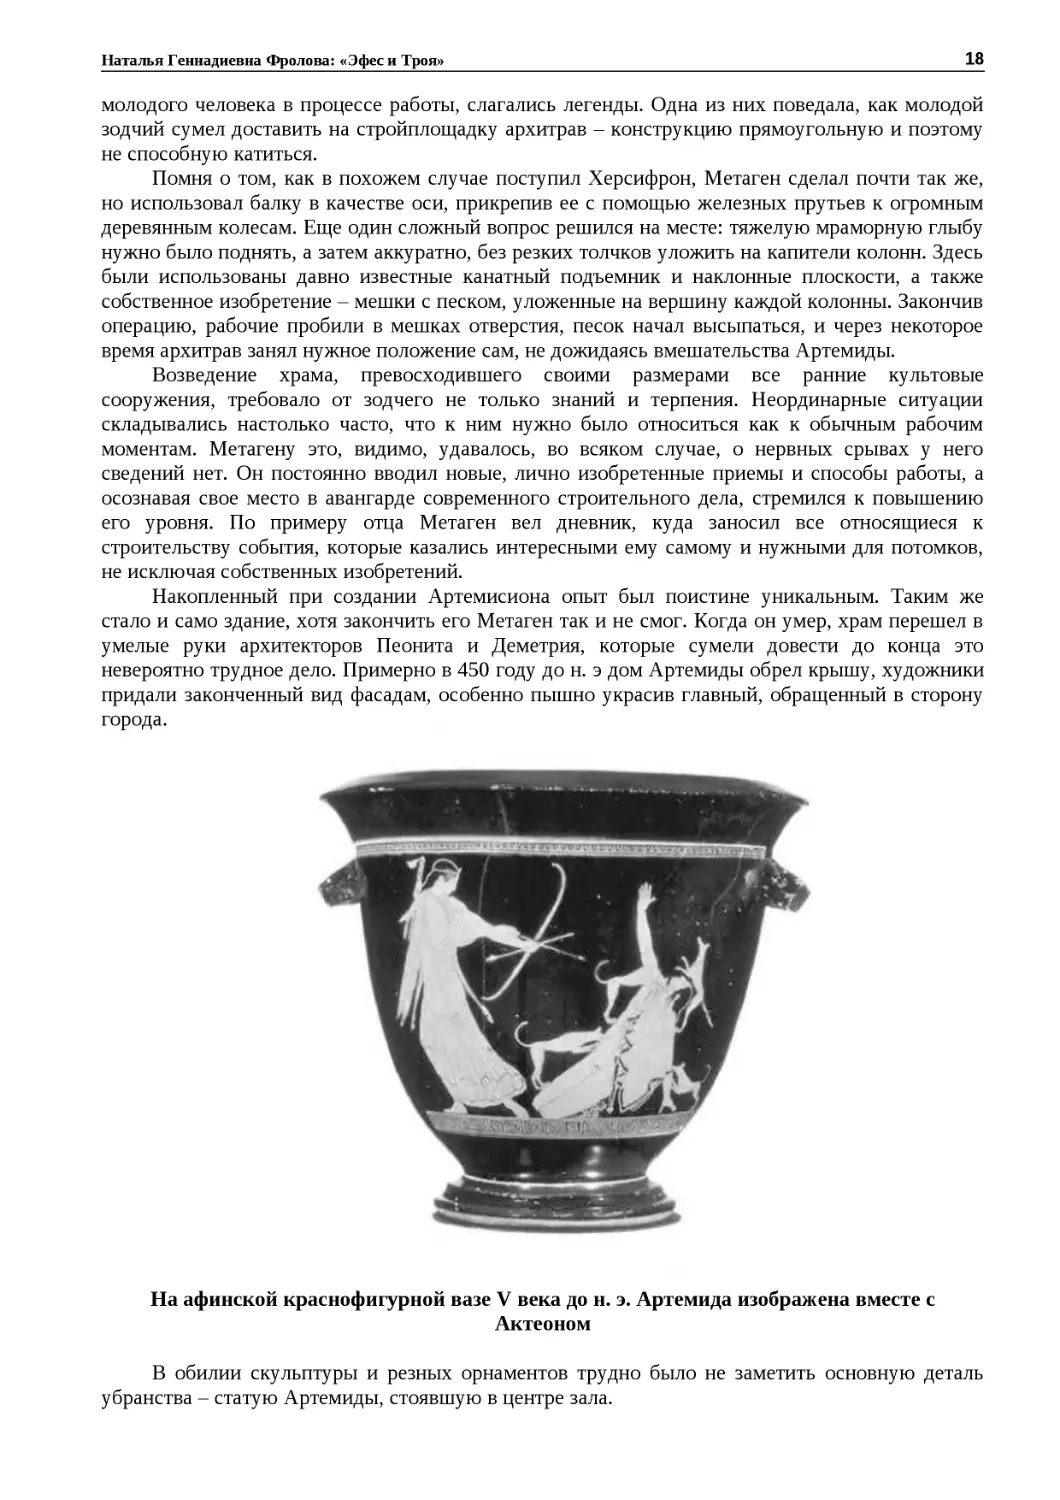 ﻿На афинской краснофигурной вазе V века до н. э. Артемида изображена вместе с Актеоно